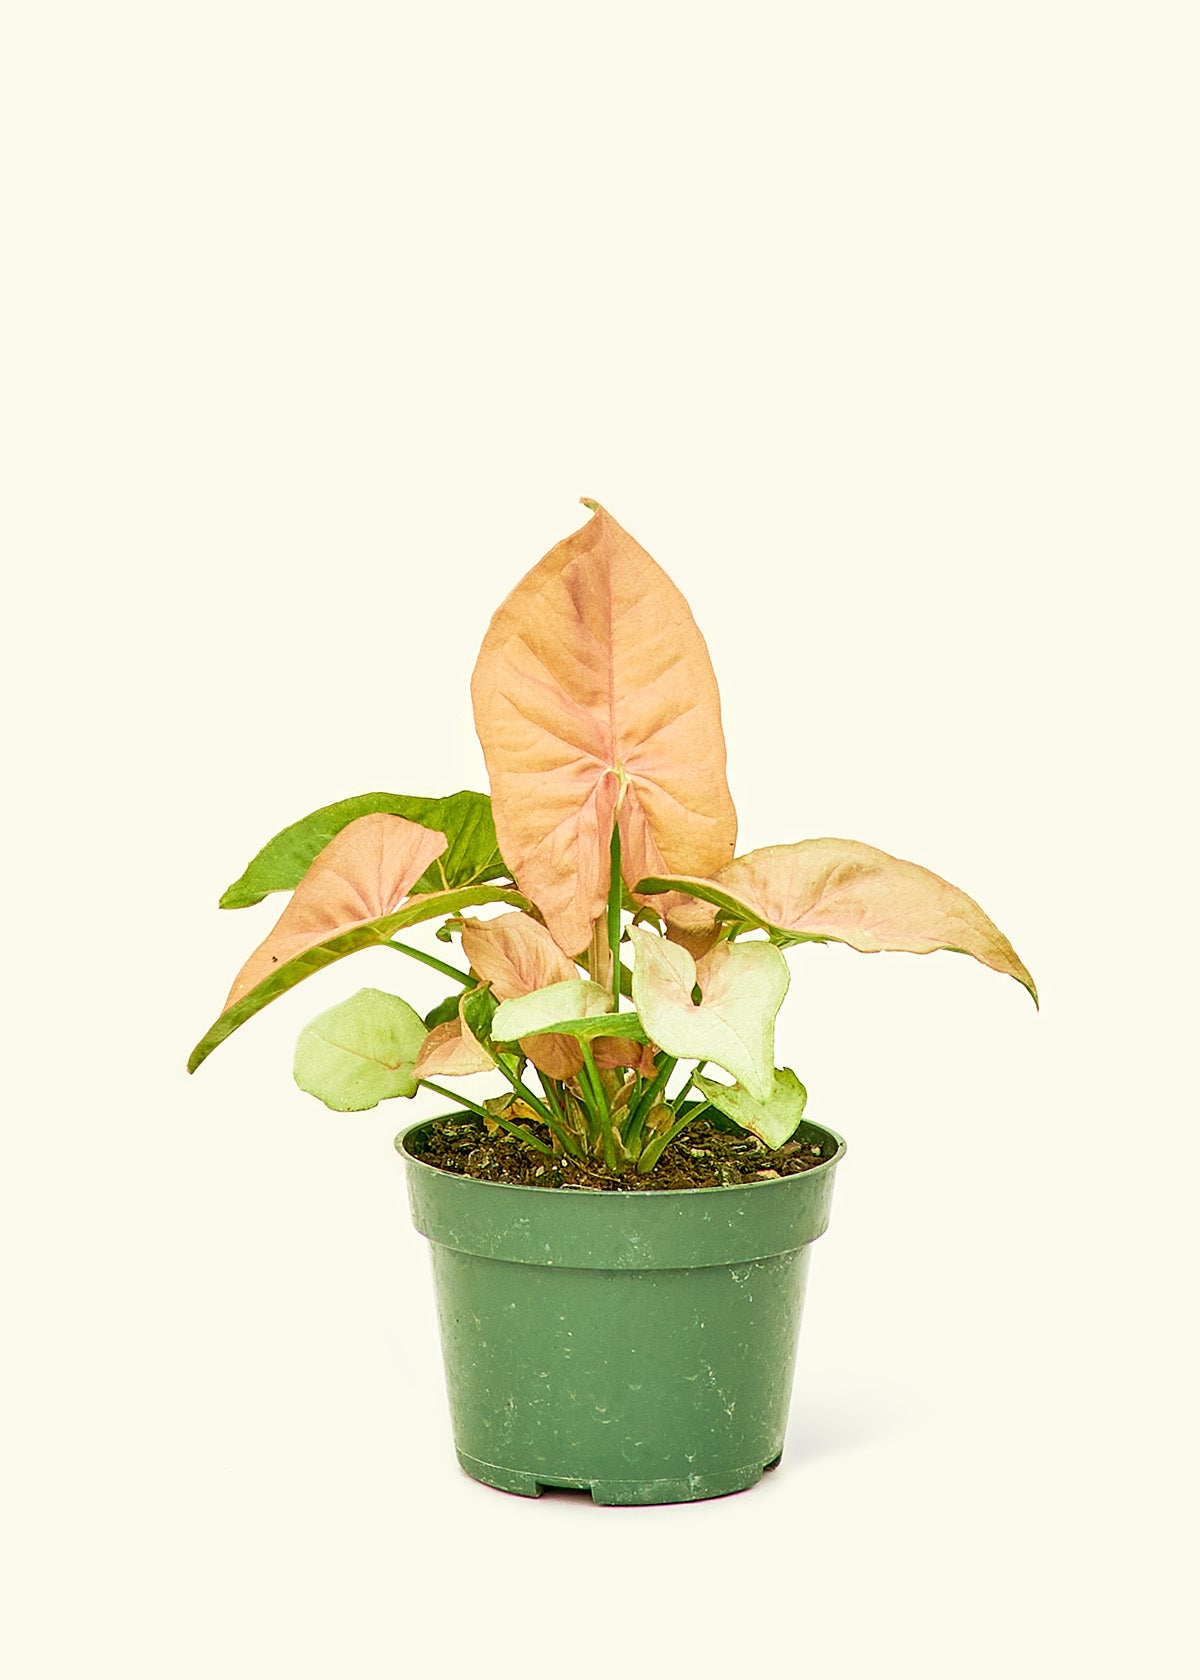 Small Pink Arrowhead in a grow pot